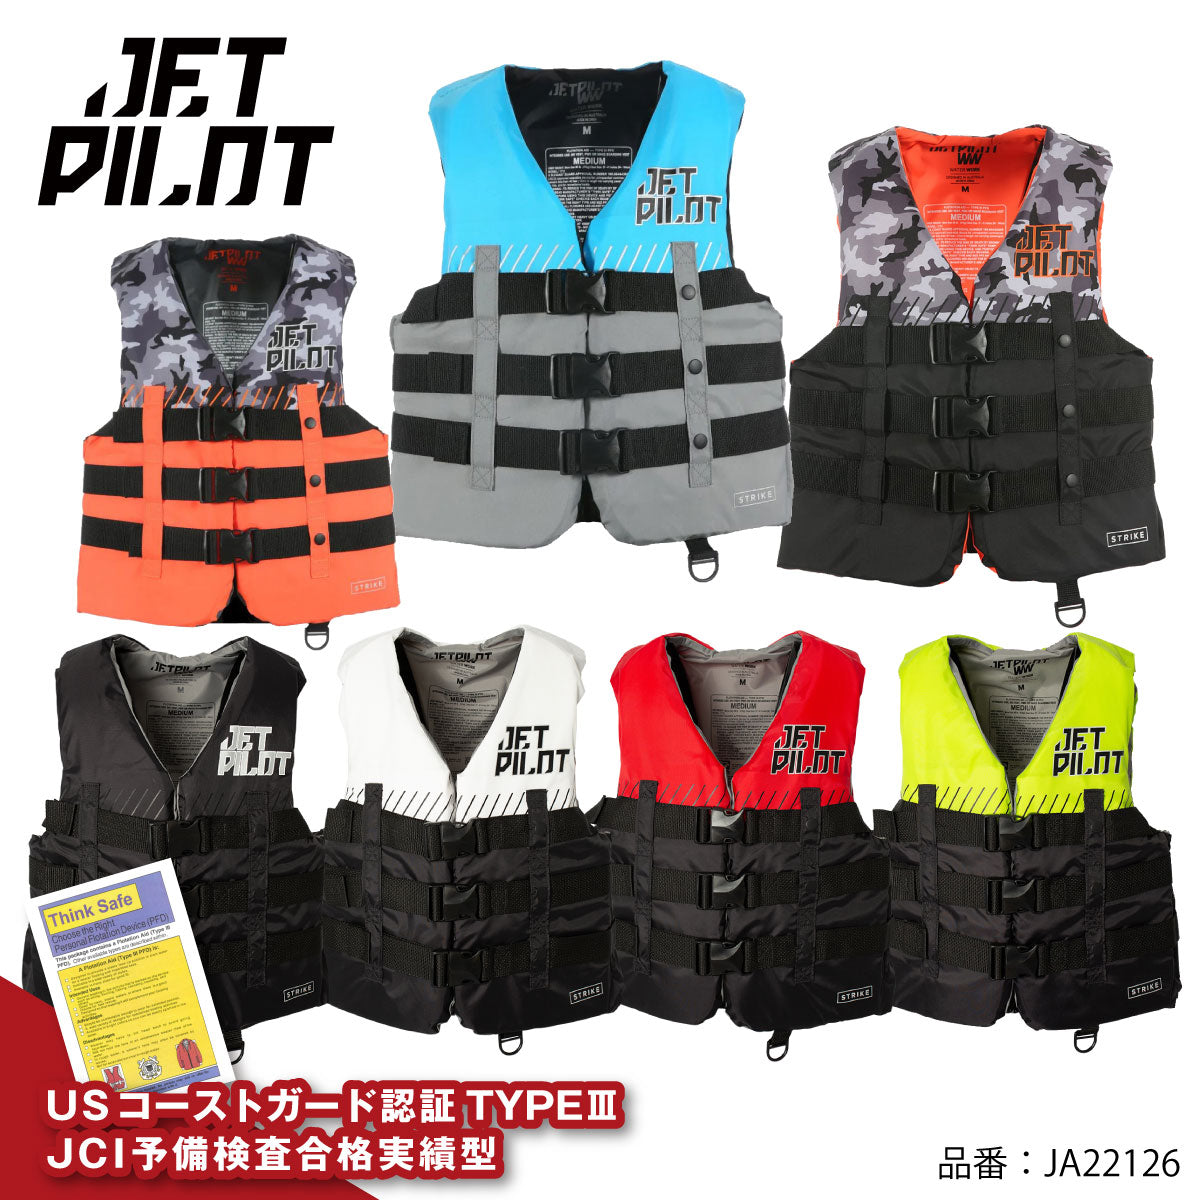 jetpilot ジェットパイロット ライフジャケット ジェットスキー